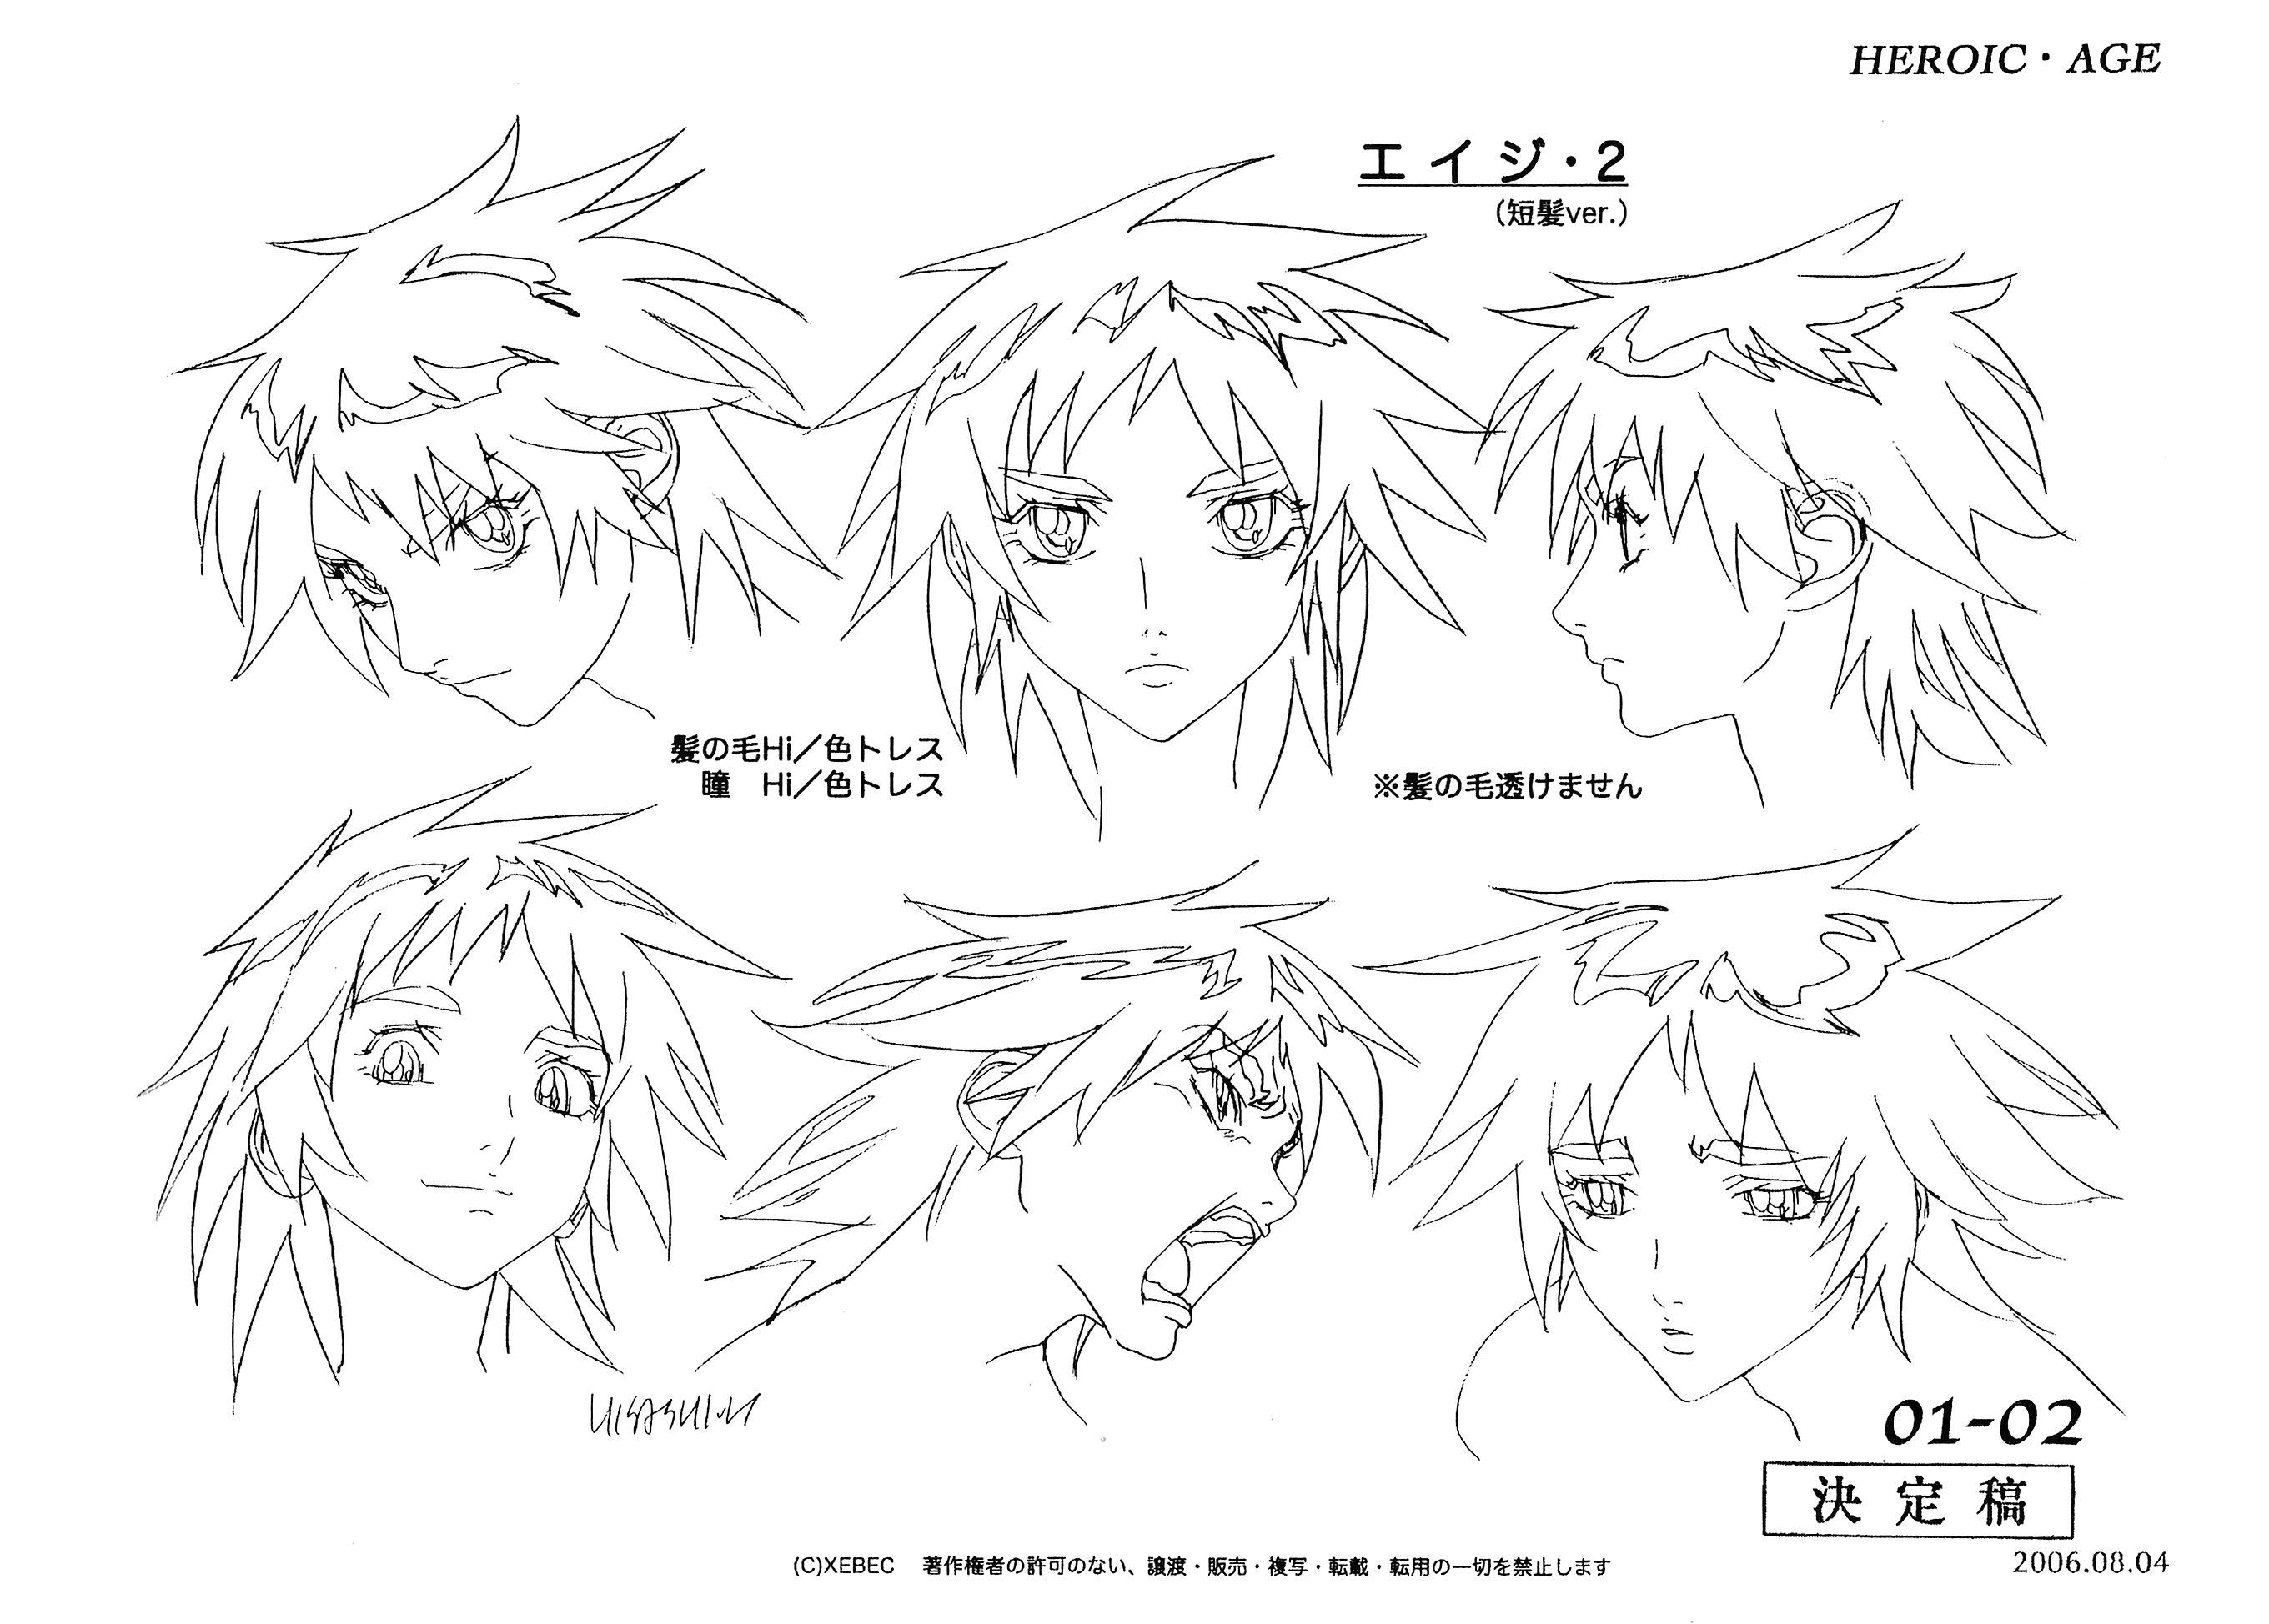 Anime Hairstyle Sheet by iSohei on DeviantArt